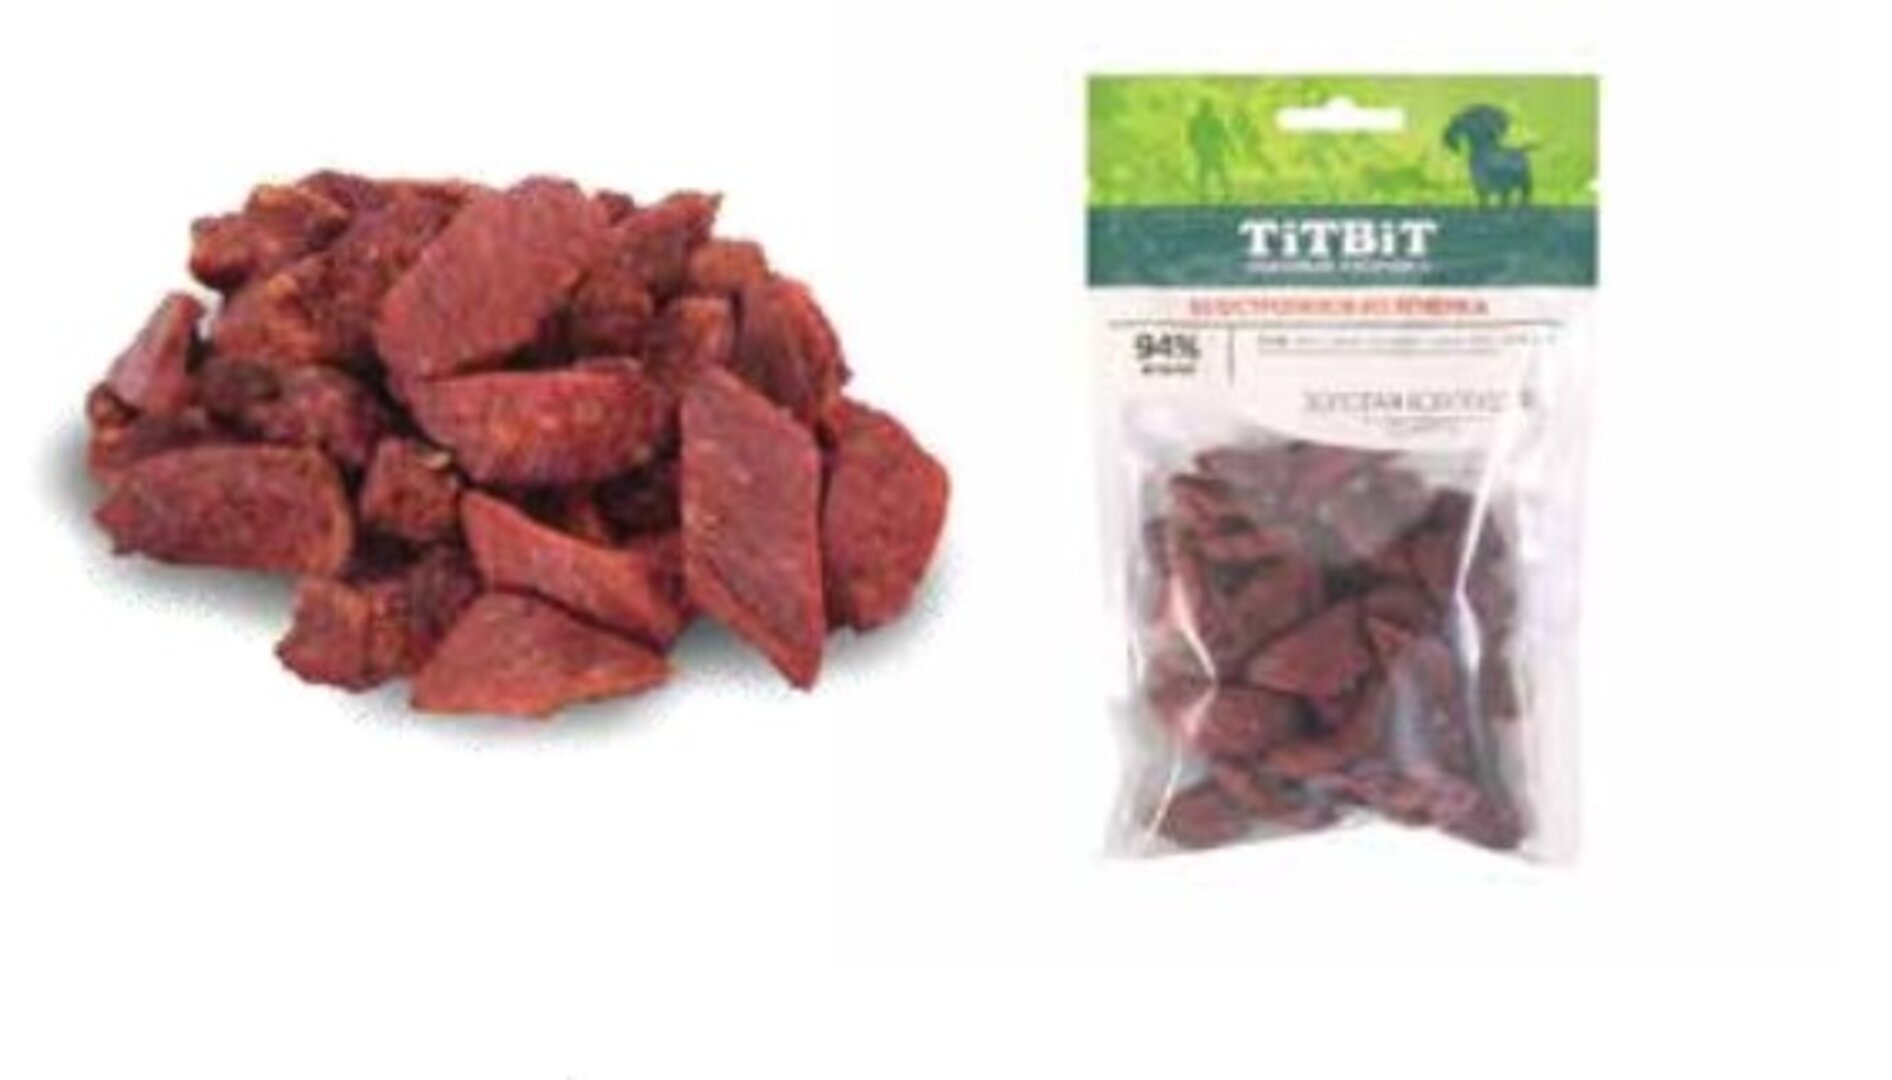 TiTBiT ტიტბიტის ოქროს კოლექცია - სასუსნაო ძაღლებისთვის ბატკნის ბისტოგანოვი 